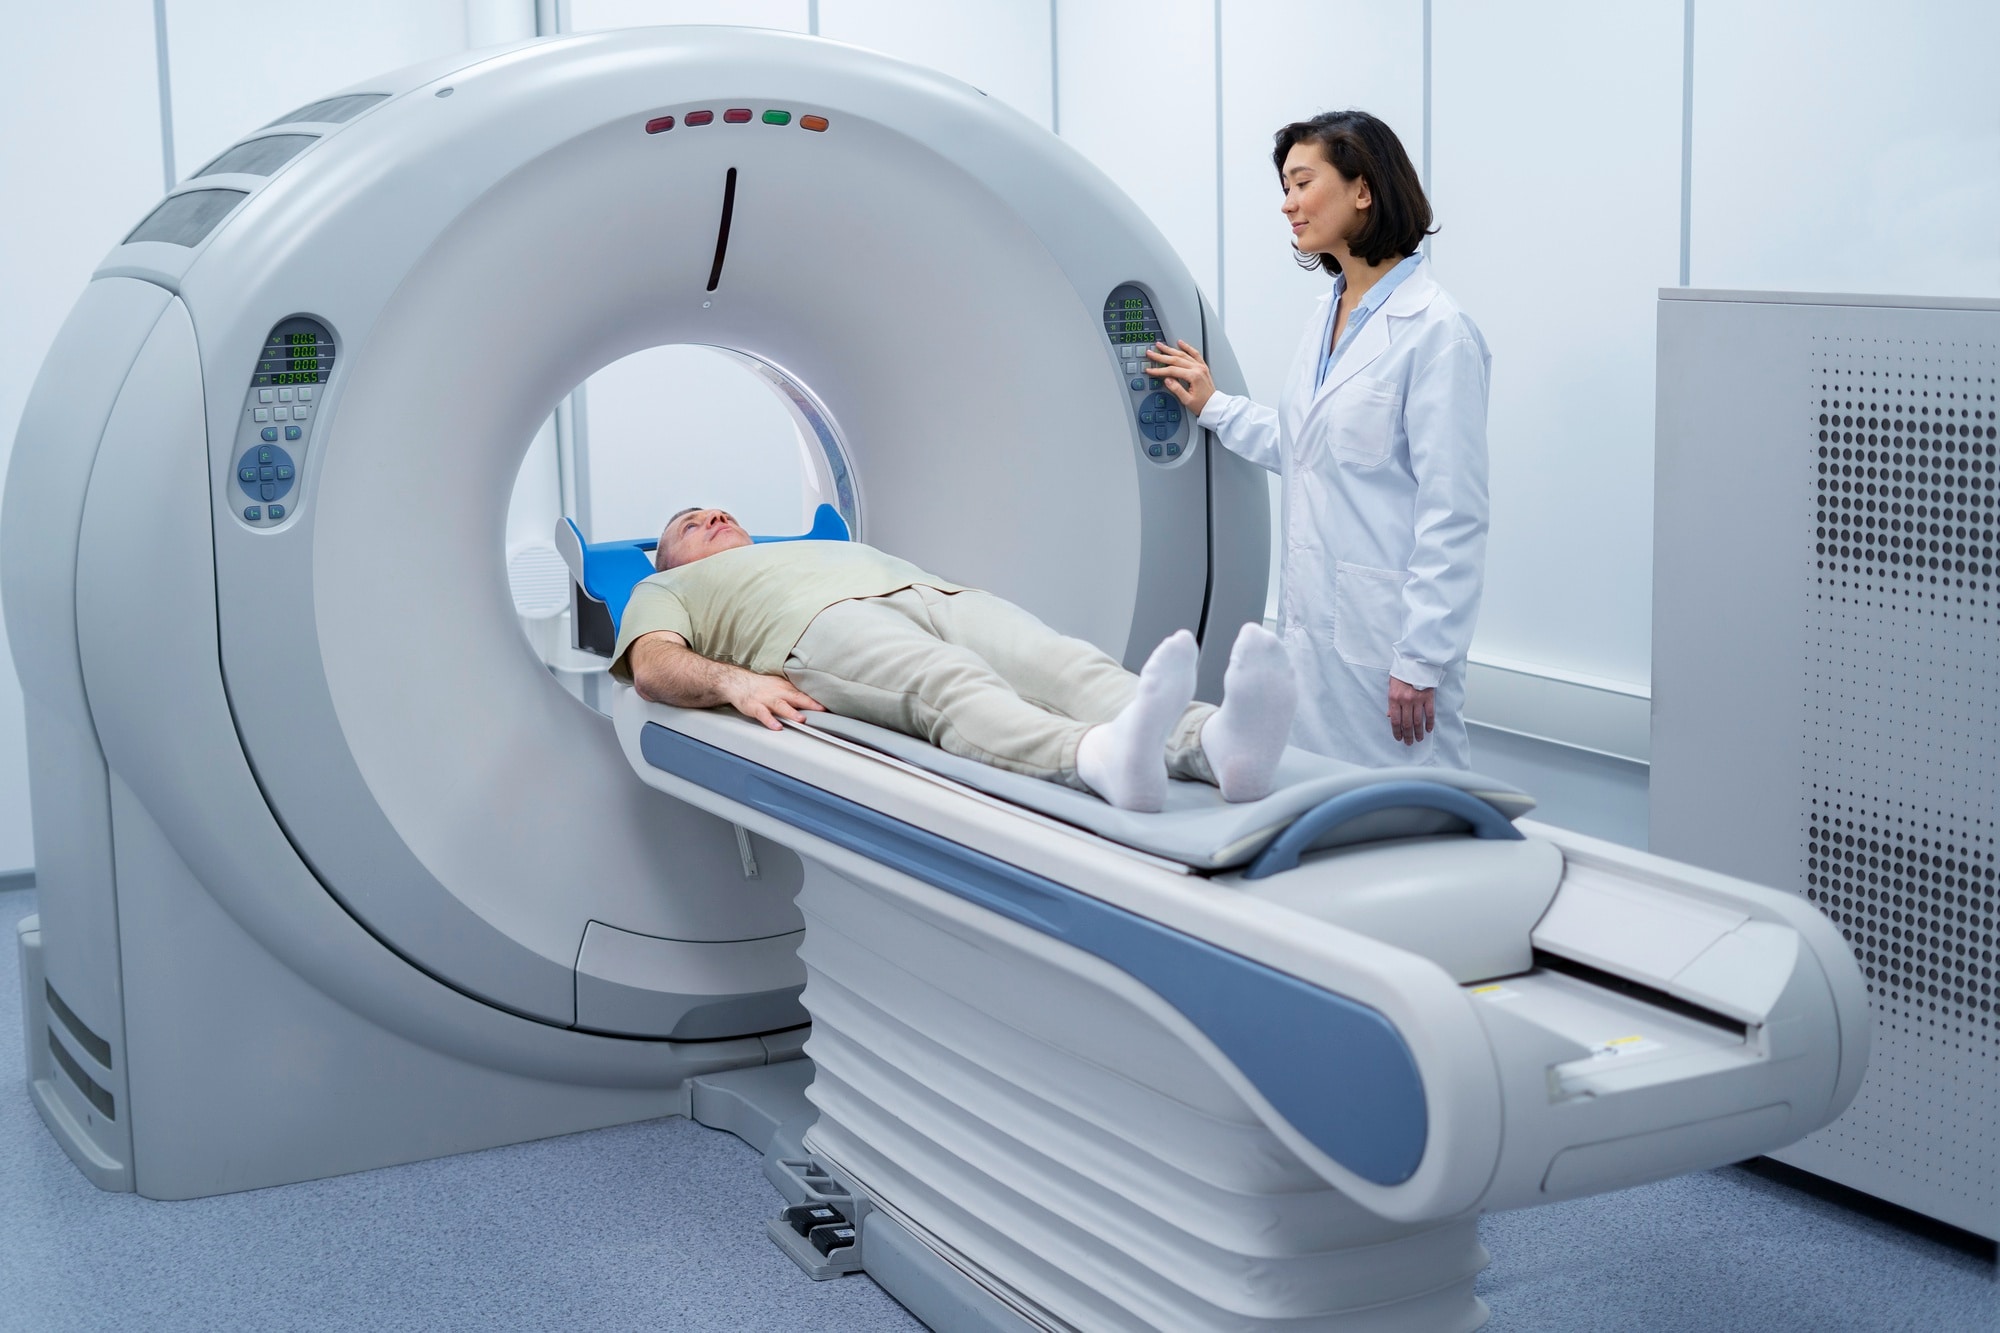 Understanding the Imaging process called MRI